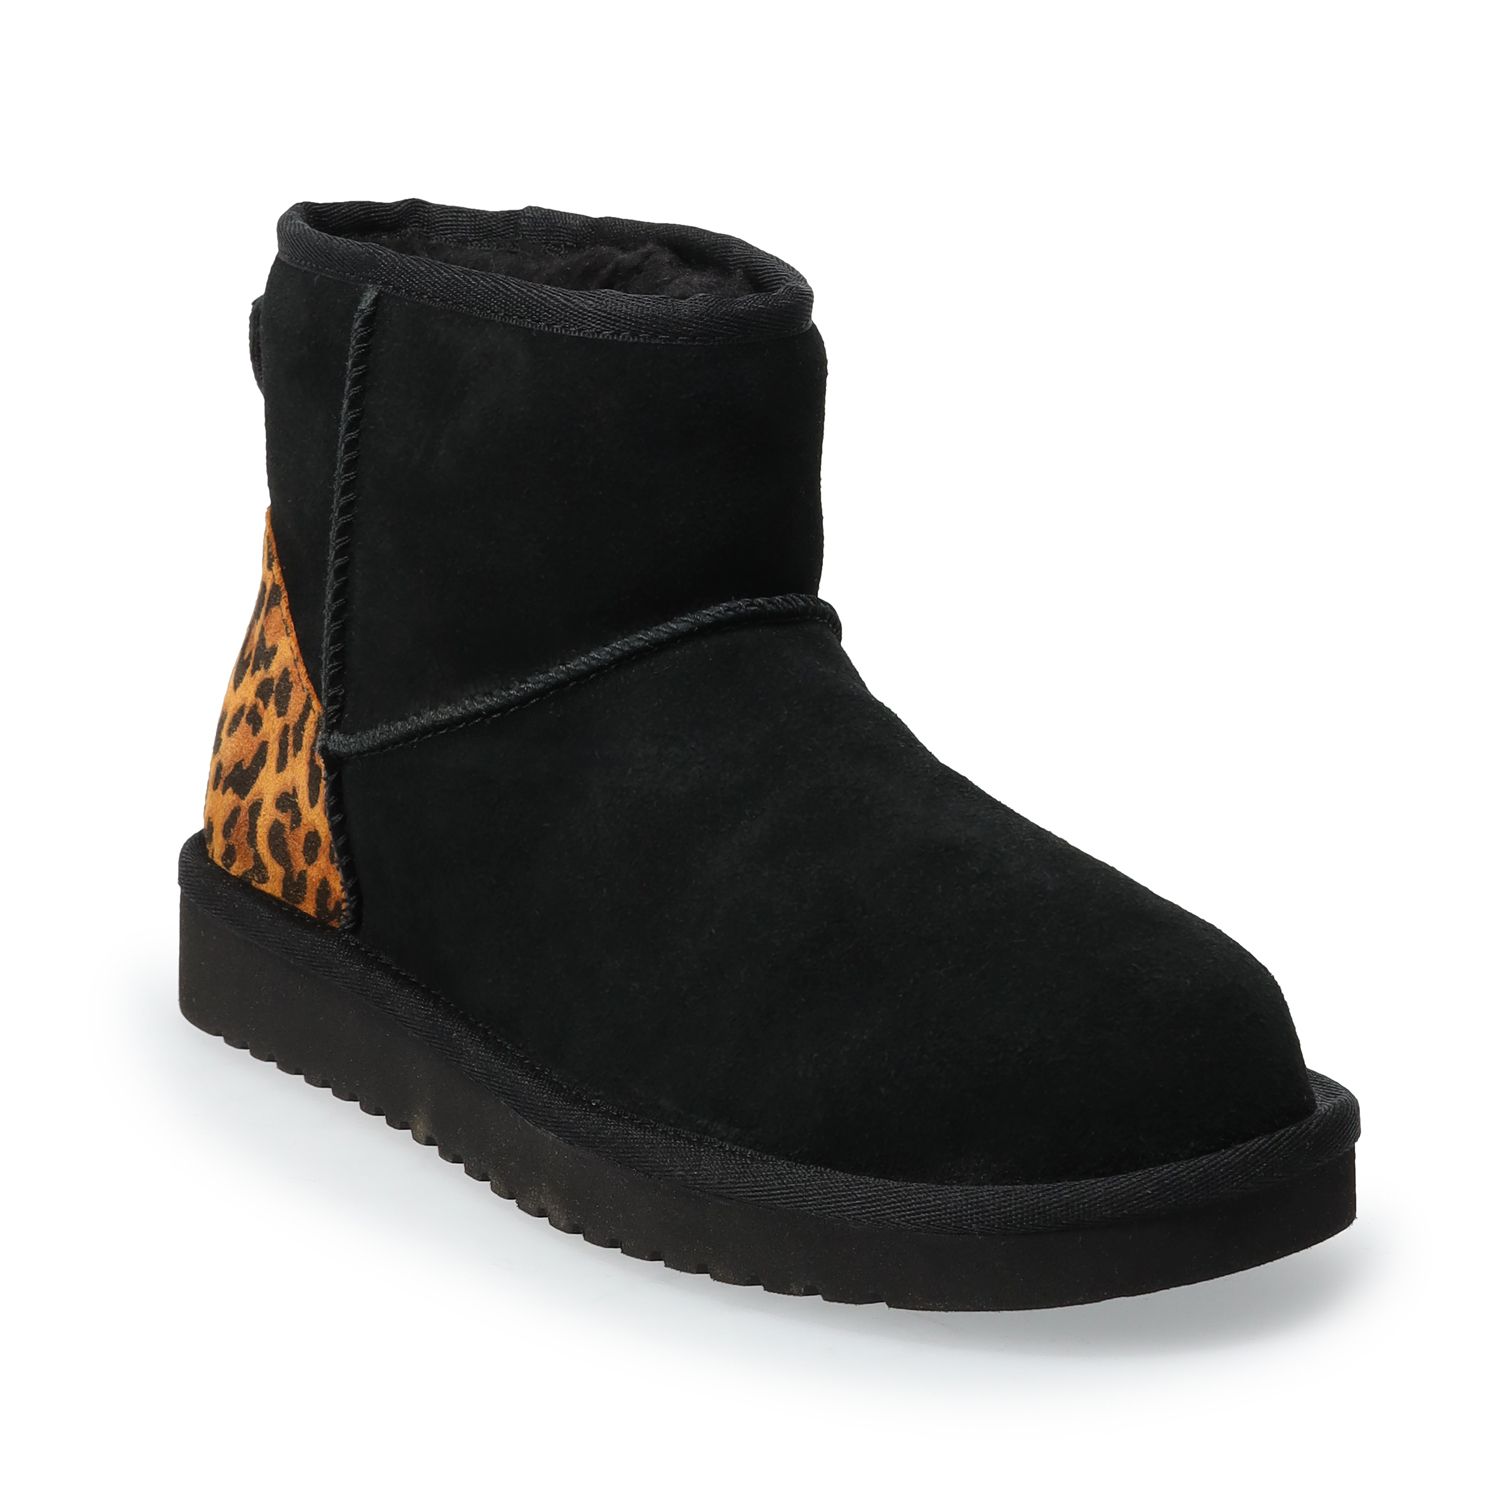 kohls leopard boots